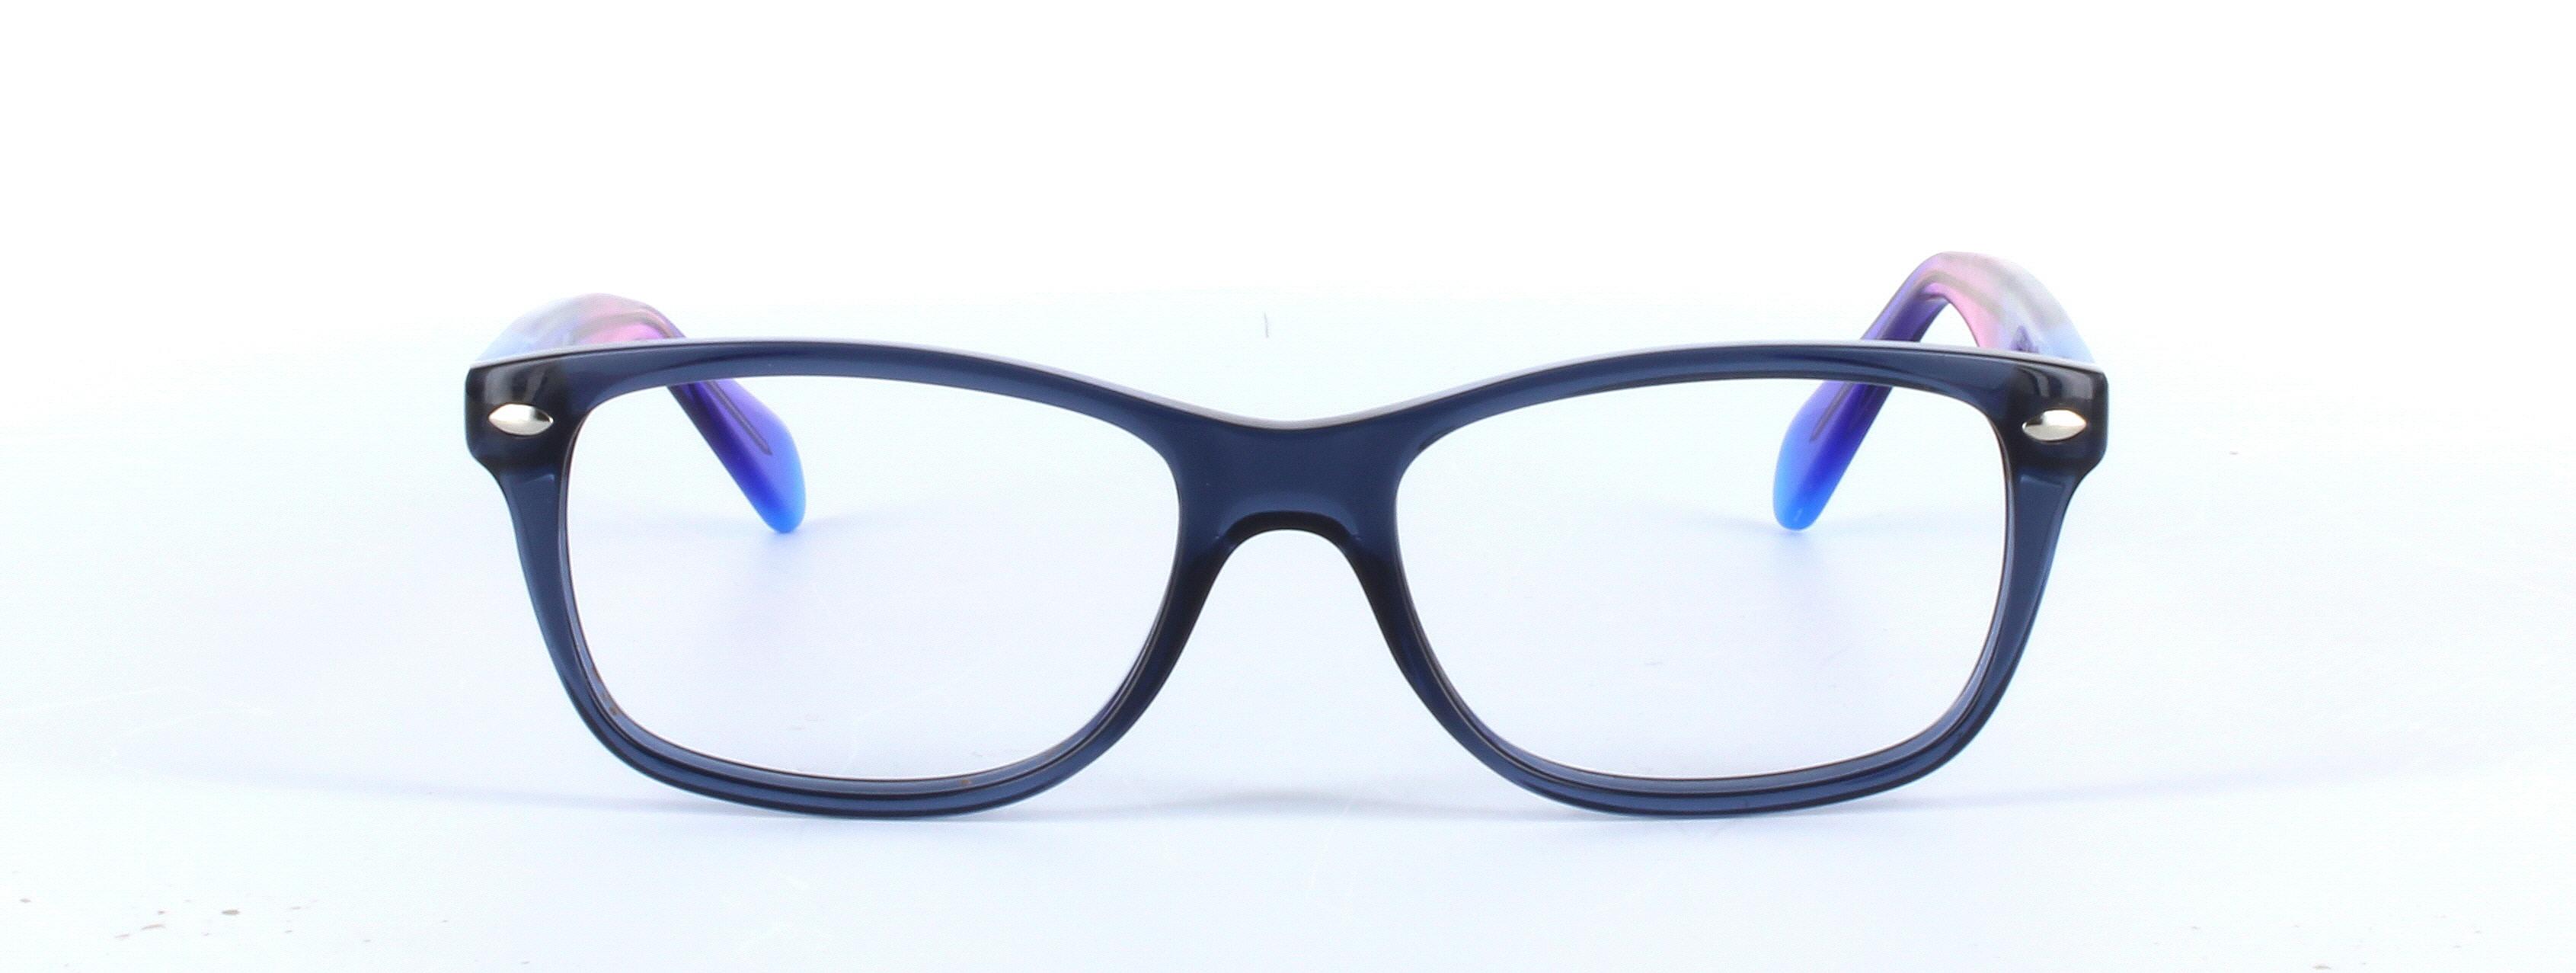 Olivia Blue Full Rim Oval Plastic Glasses - Image View 5